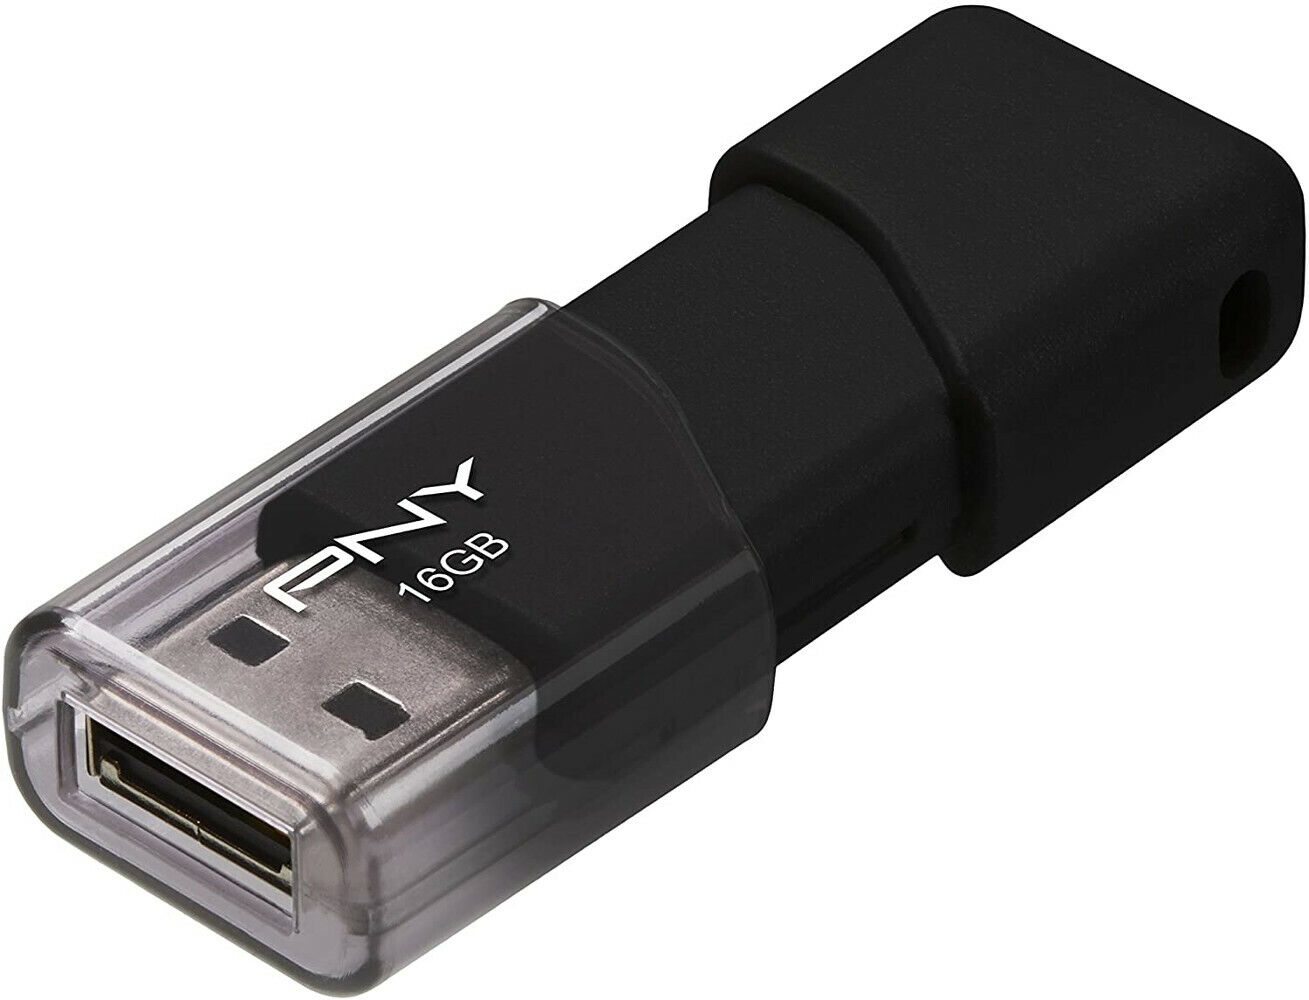 Knoppix 9.1 Desktop DVD Live Portable USB Flash Thumb Drive GNU Linux OS 64 Bit